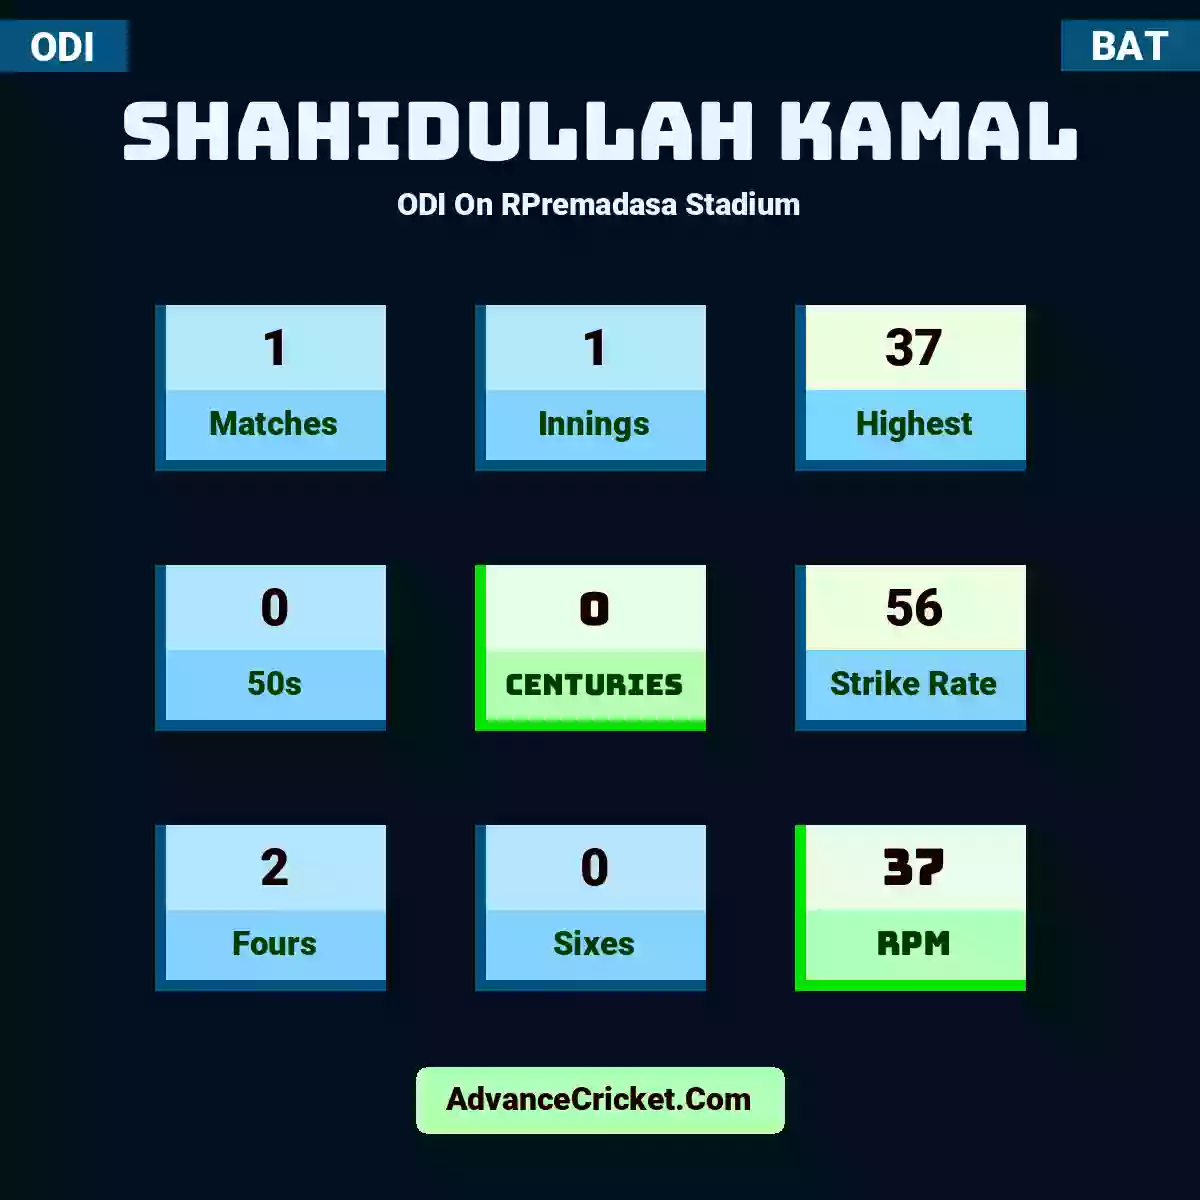 Shahidullah Kamal ODI  On RPremadasa Stadium, Shahidullah Kamal played 1 matches, scored 37 runs as highest, 0 half-centuries, and 0 centuries, with a strike rate of 56. S.Kamal hit 2 fours and 0 sixes, with an RPM of 37.